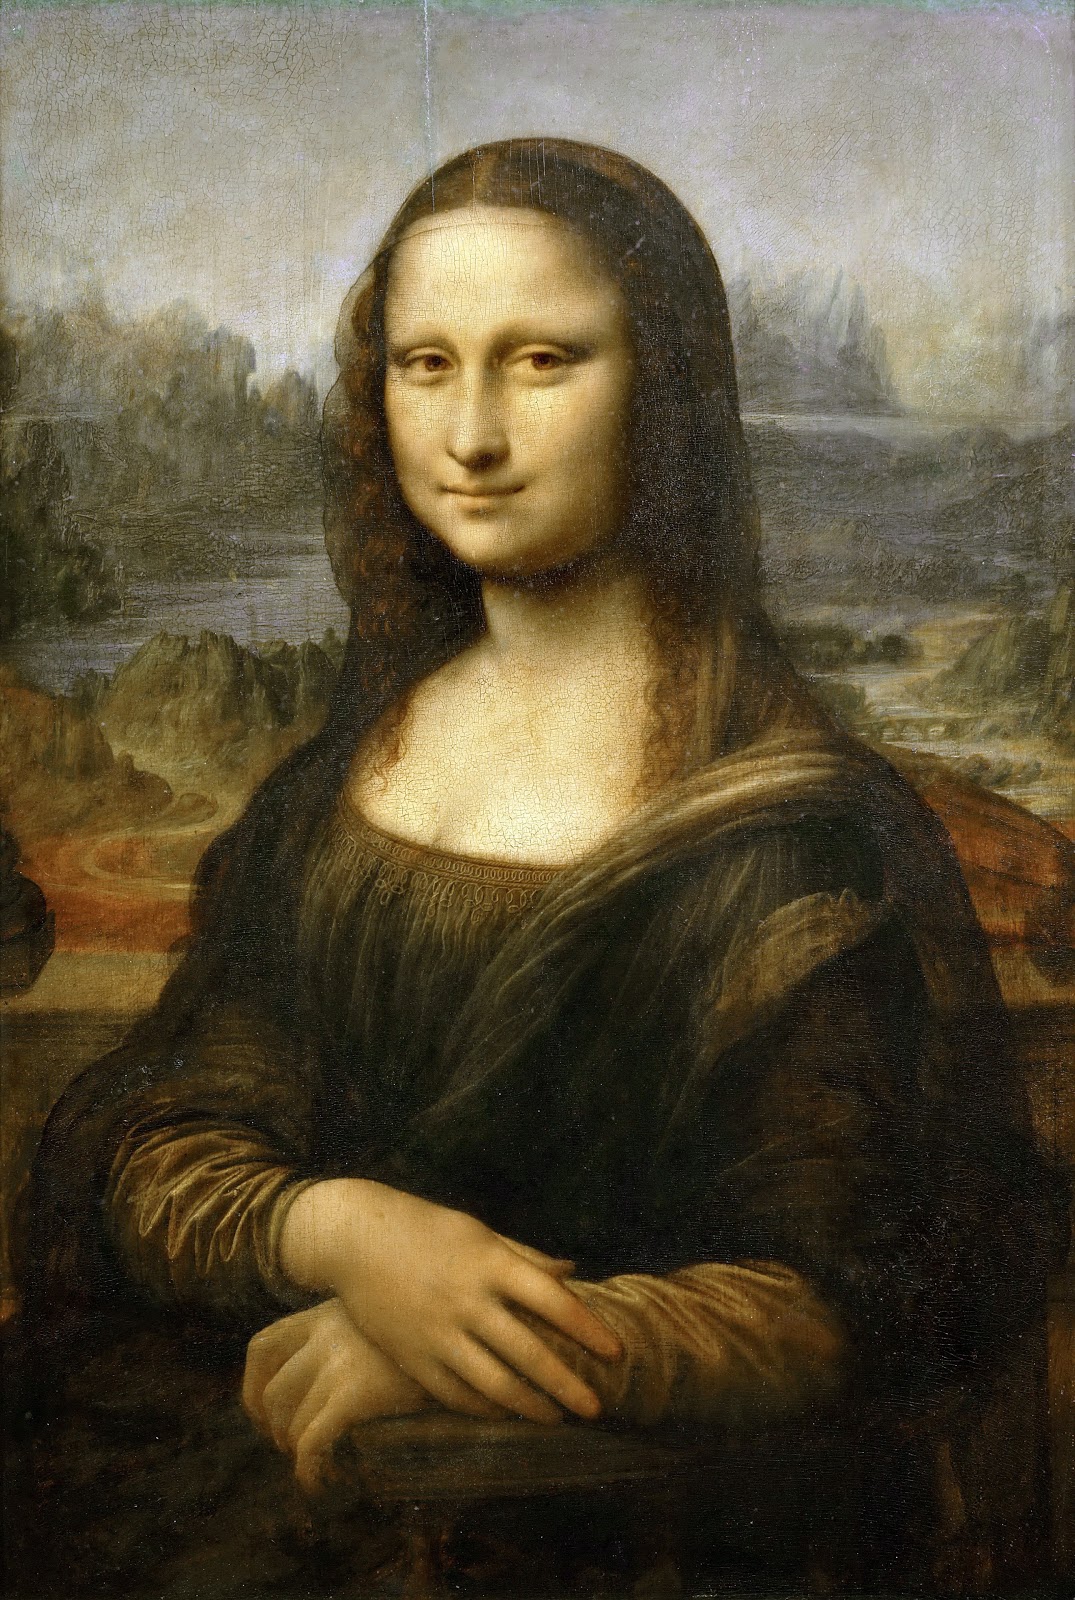 Leonardo+da+Vinci-1452-1519 (975).jpg